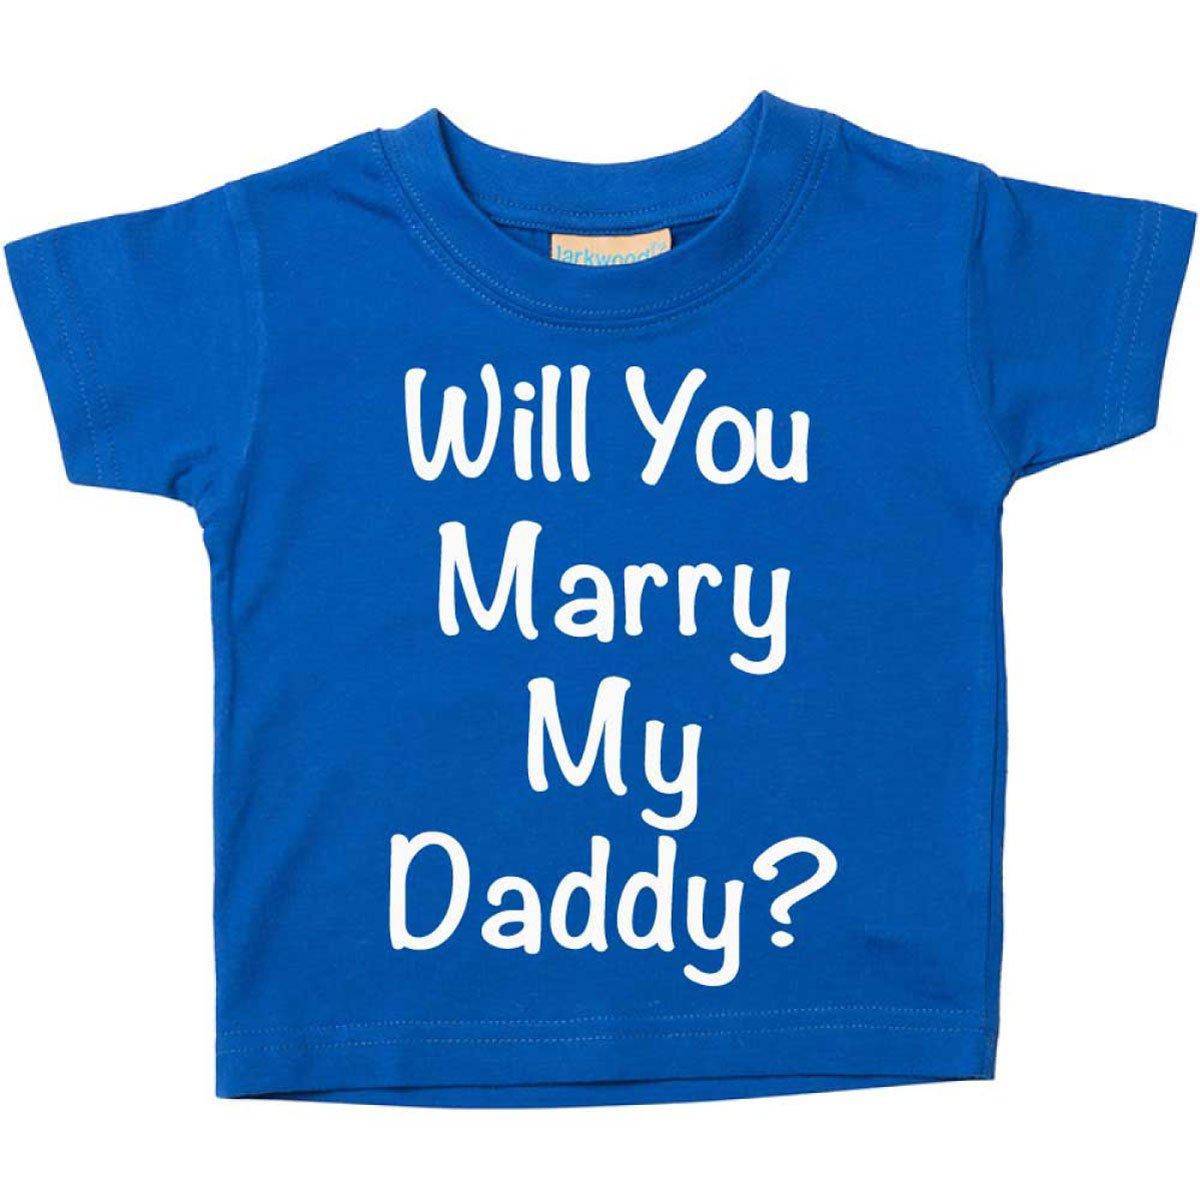 Will You Marry My Daddy? Blue Tshirt